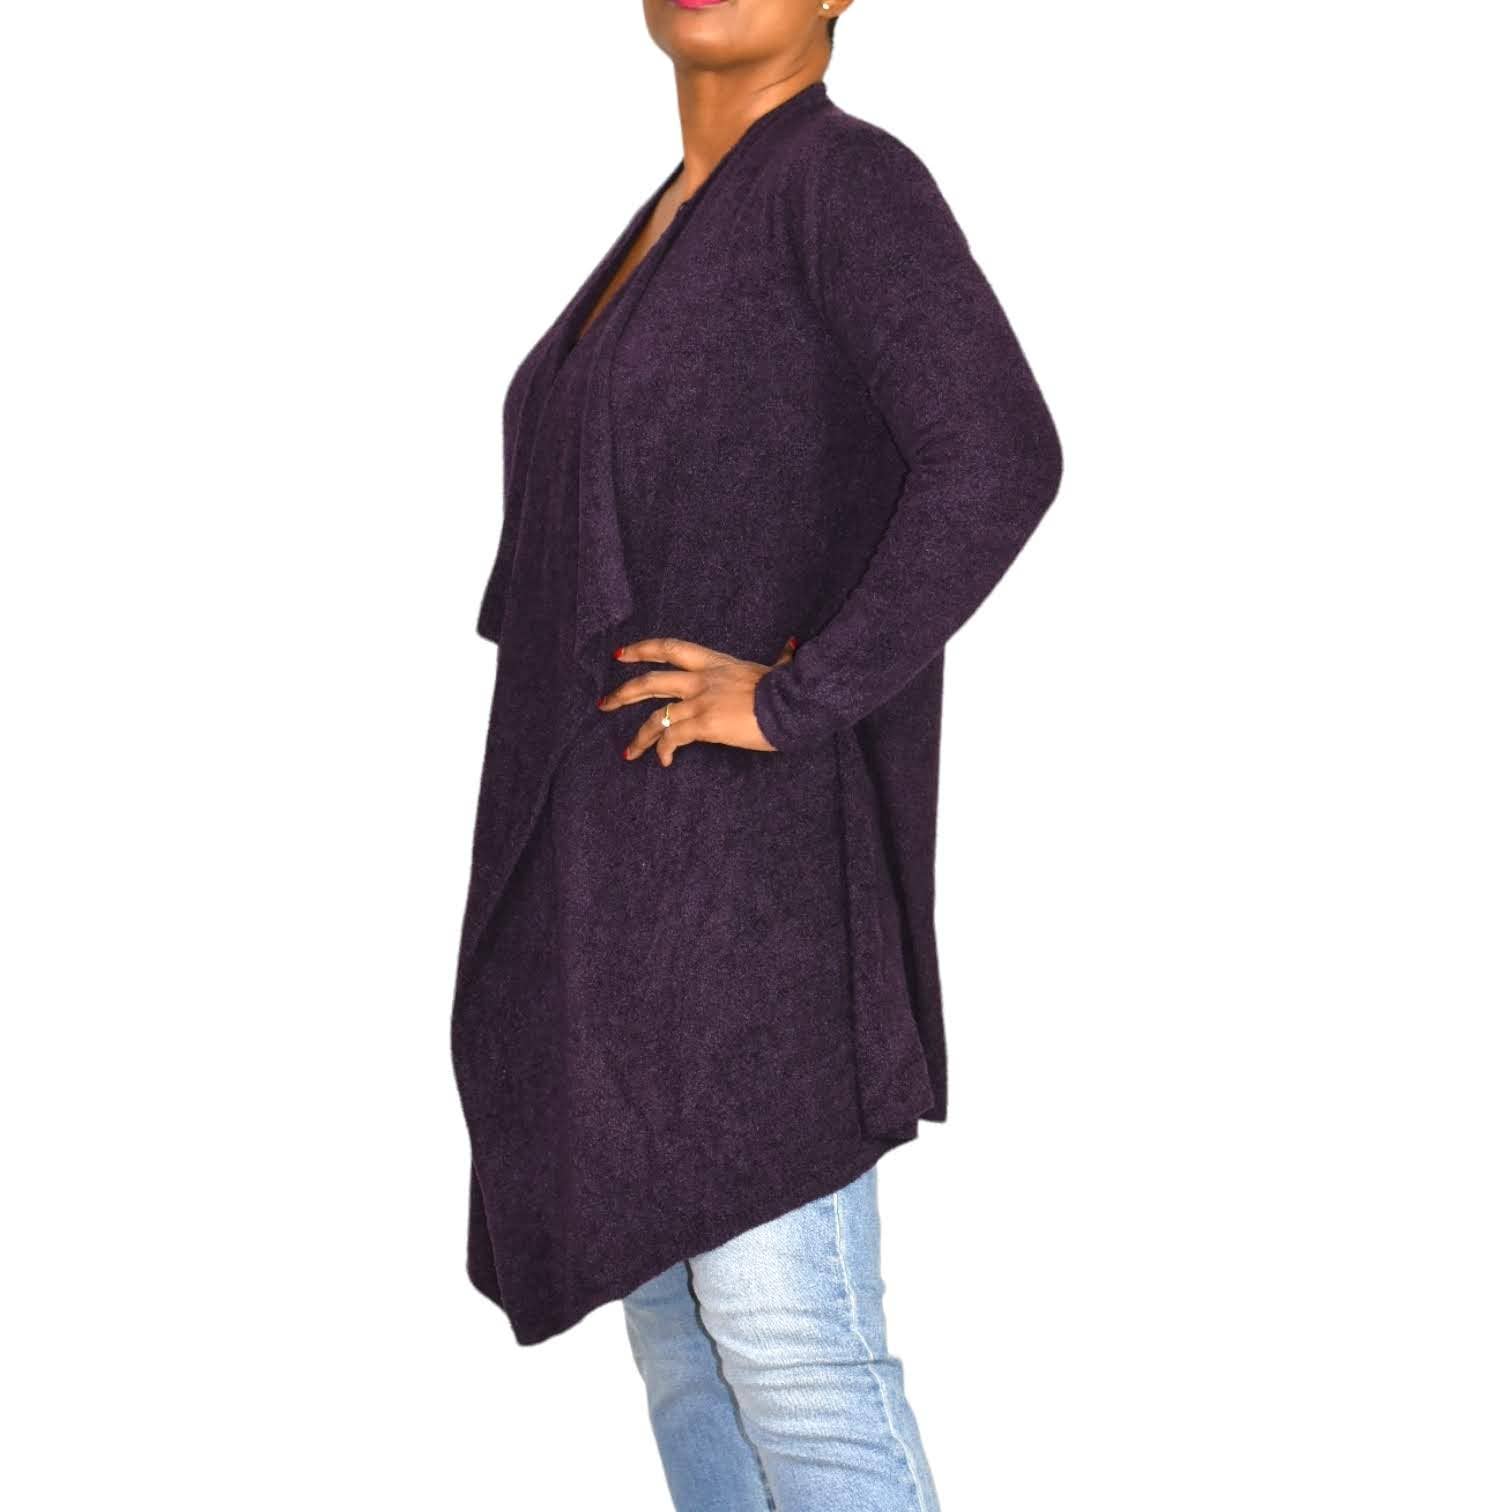 Barefoot Dreams Calypso Wrap Bamboo Chic Lite Purple Amethyst Sweater Size Small